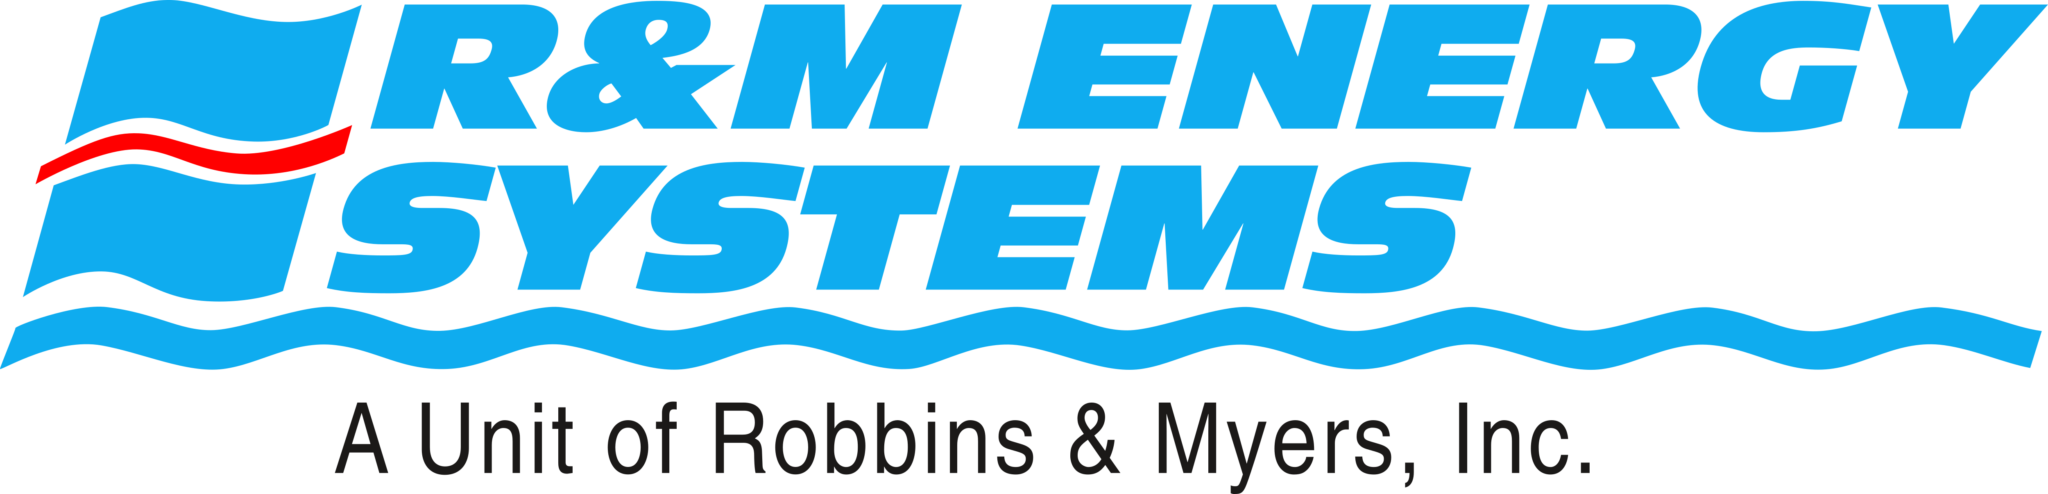 M Энергетик лого. Energy System logo. Энерджи лого бытовая техника. Норд Энерджи Системс Князева. Energy units